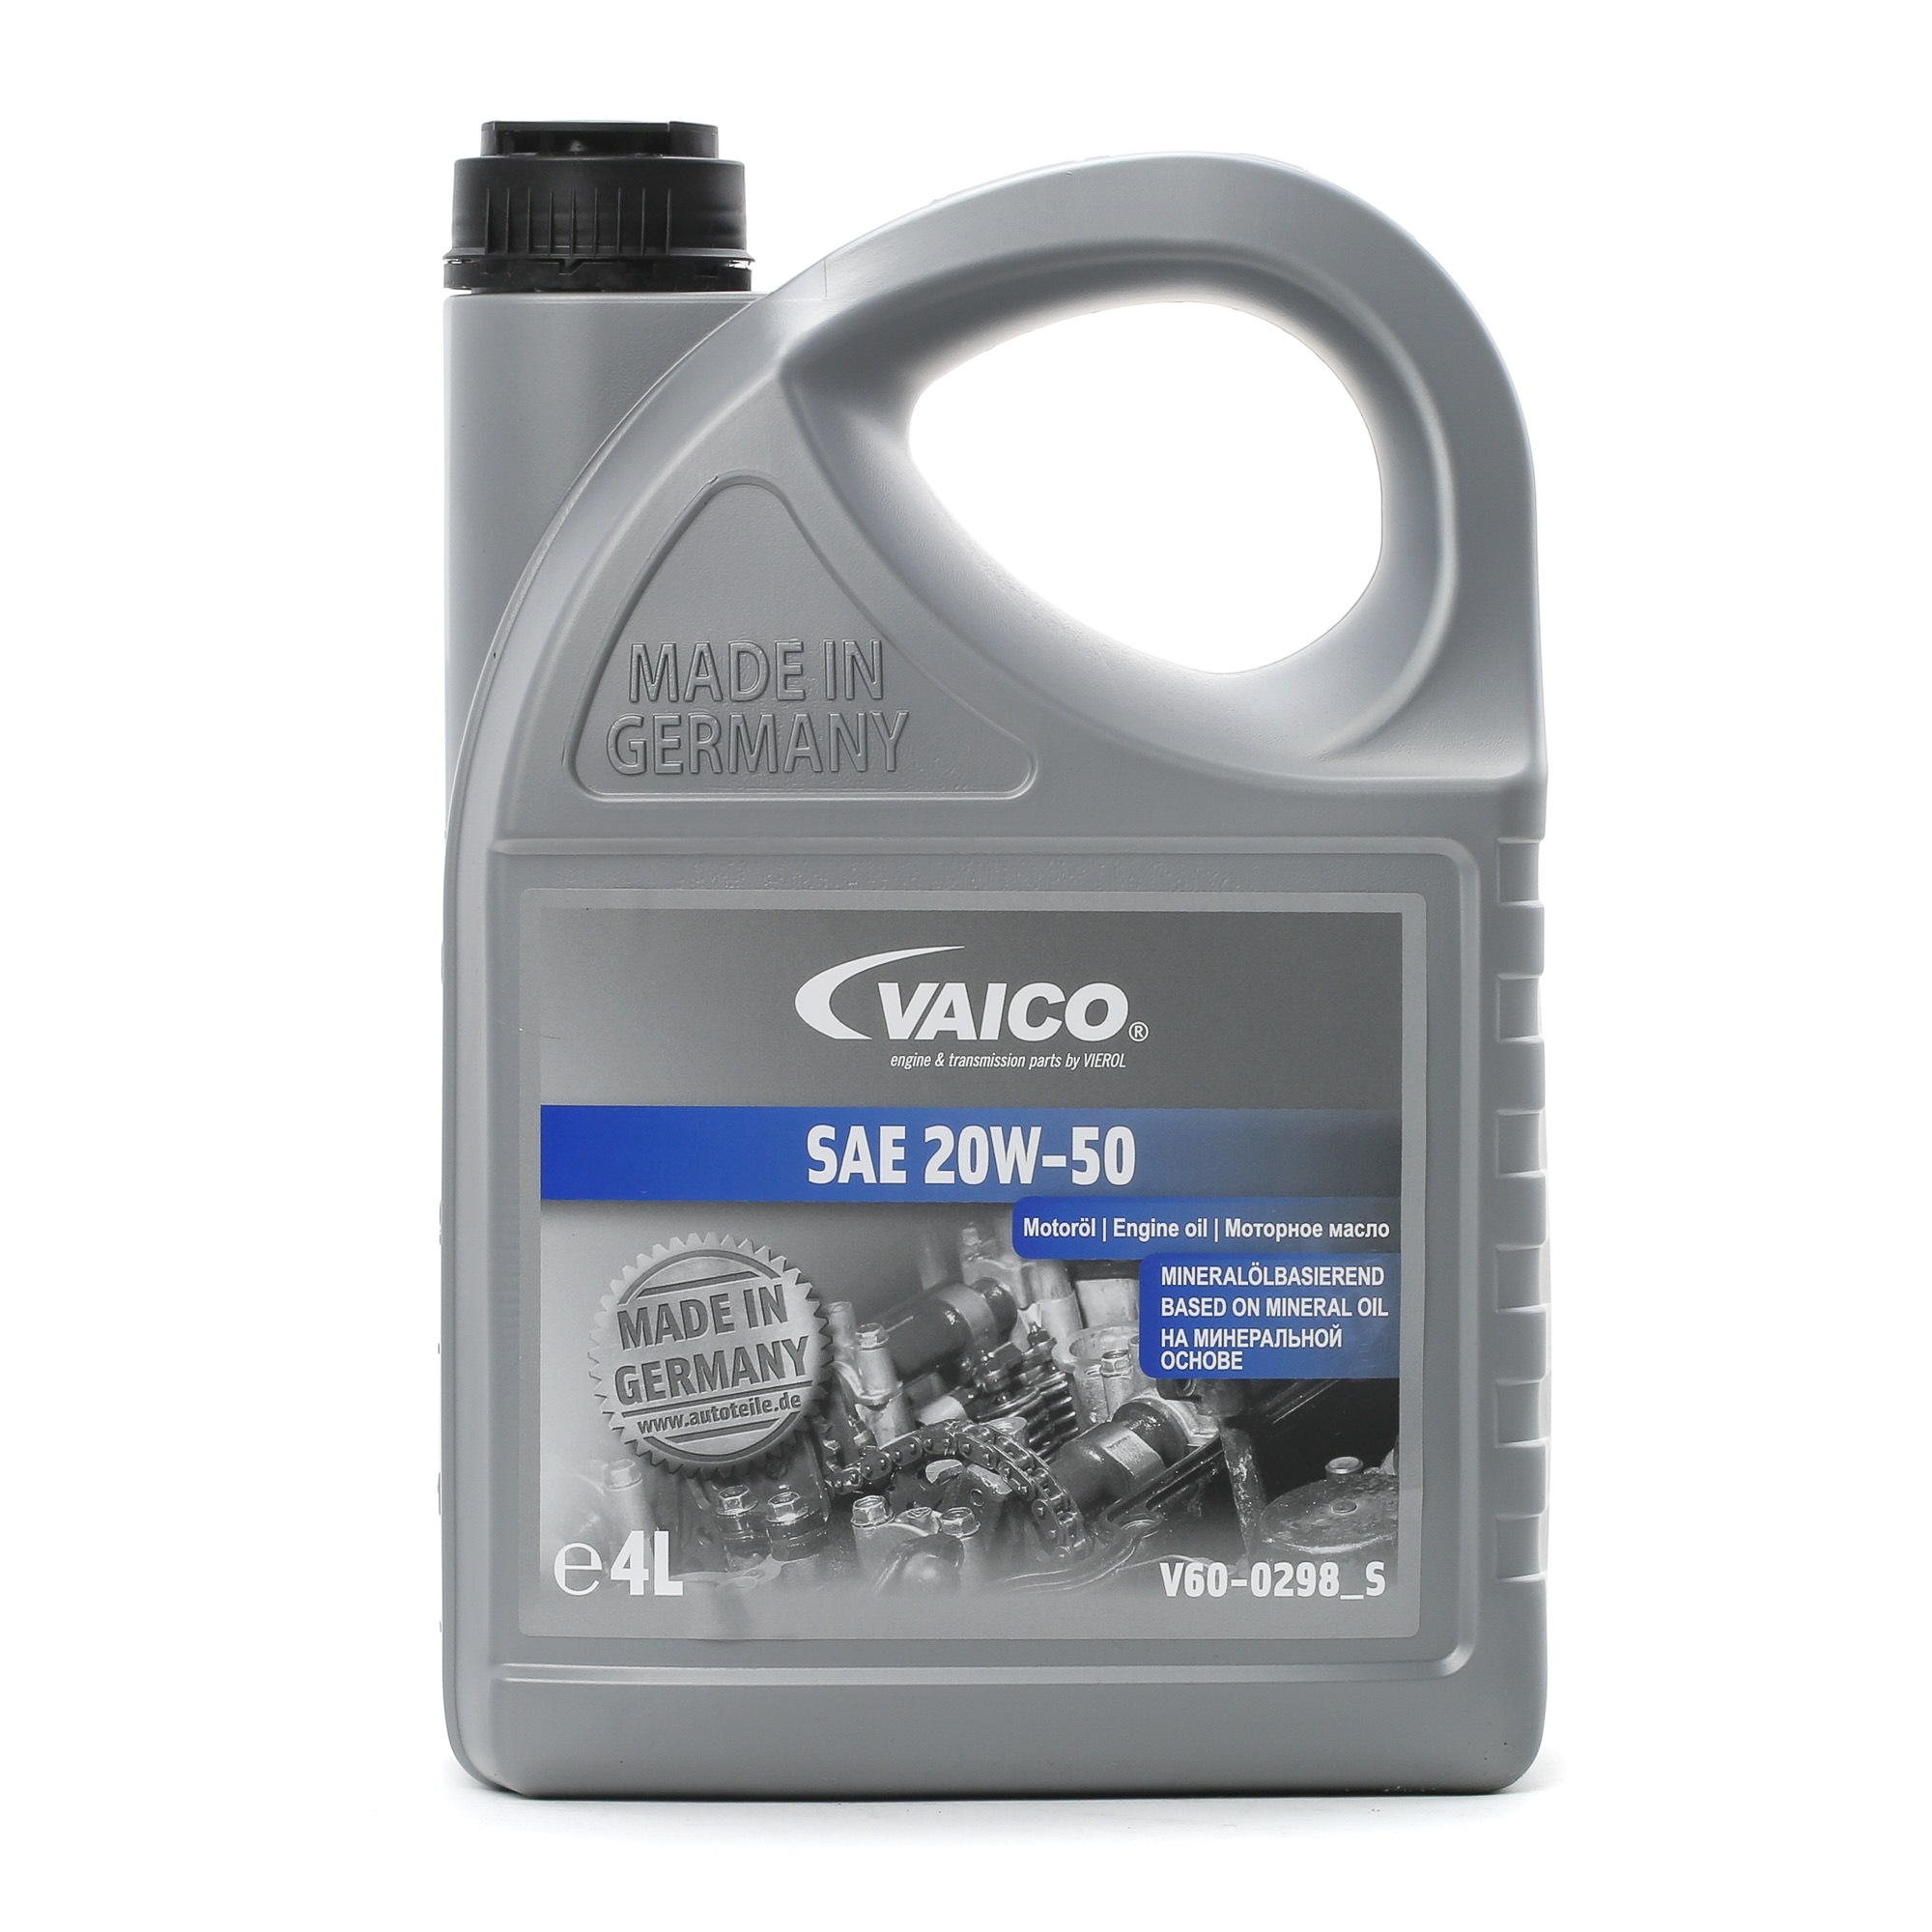 Great value for money - VAICO Engine oil V60-0298_S